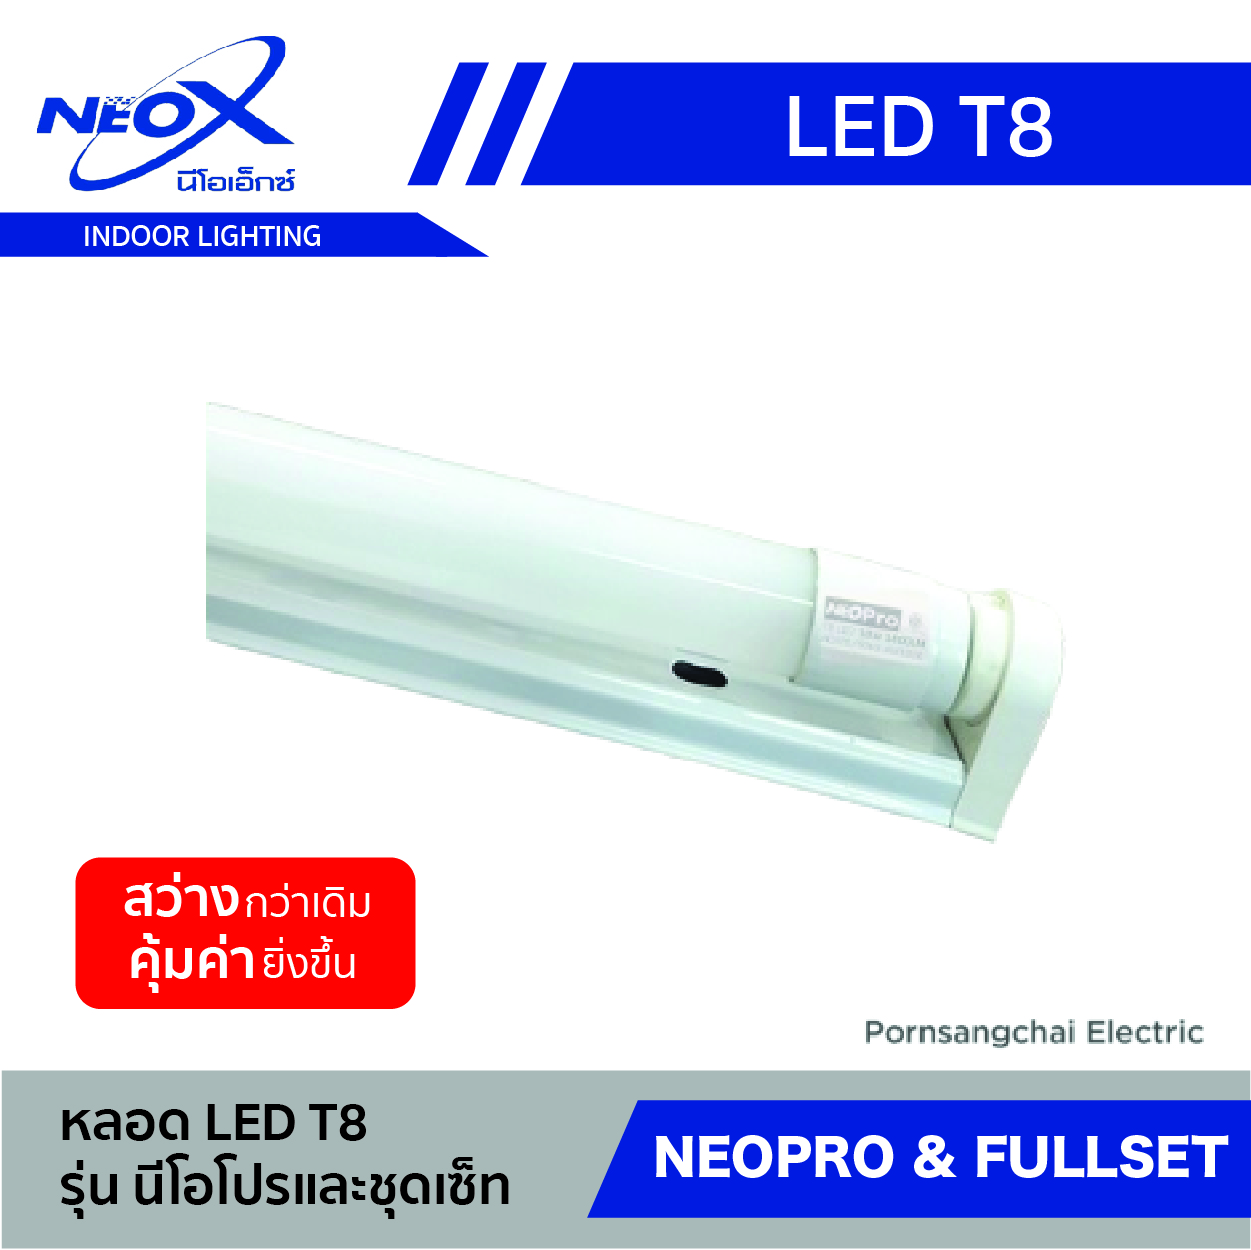  LED T8 NEOX รุ่น Neopro